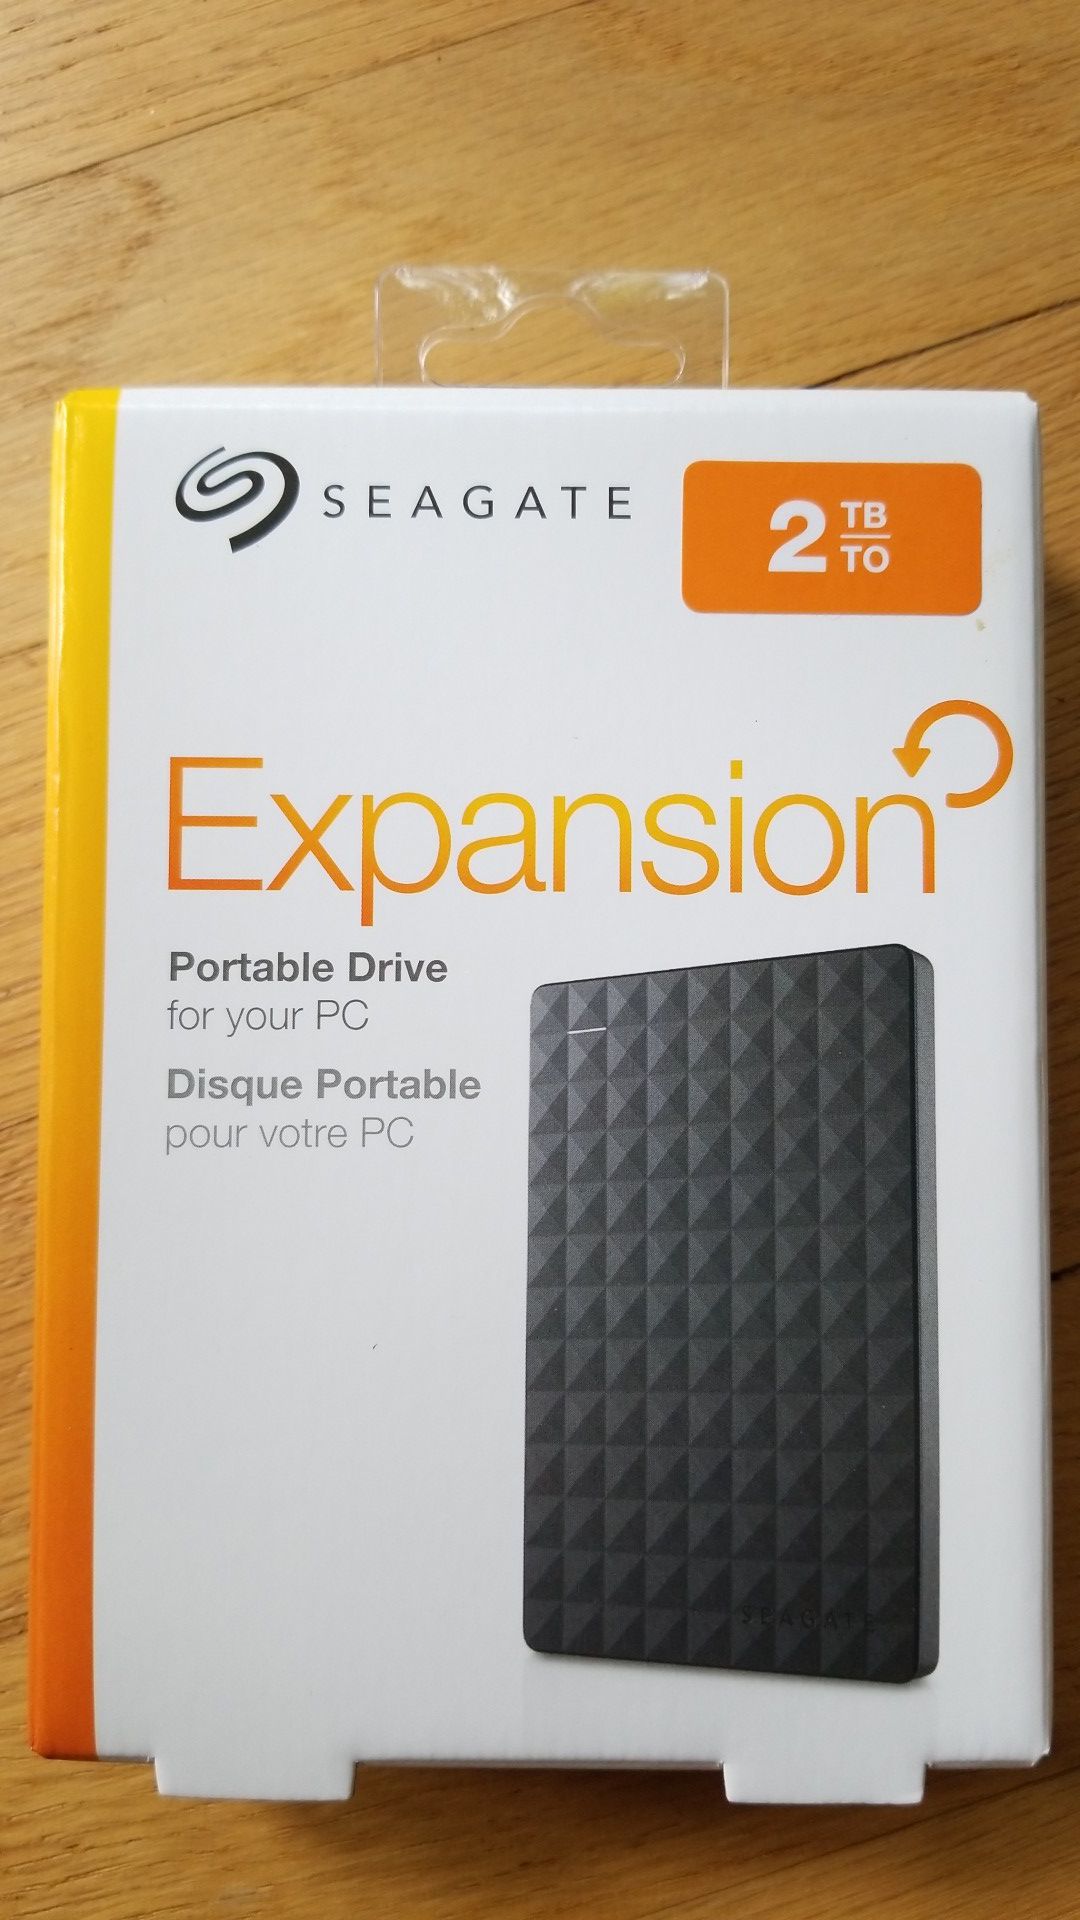 Brand new Seagate 2TB external hard drive